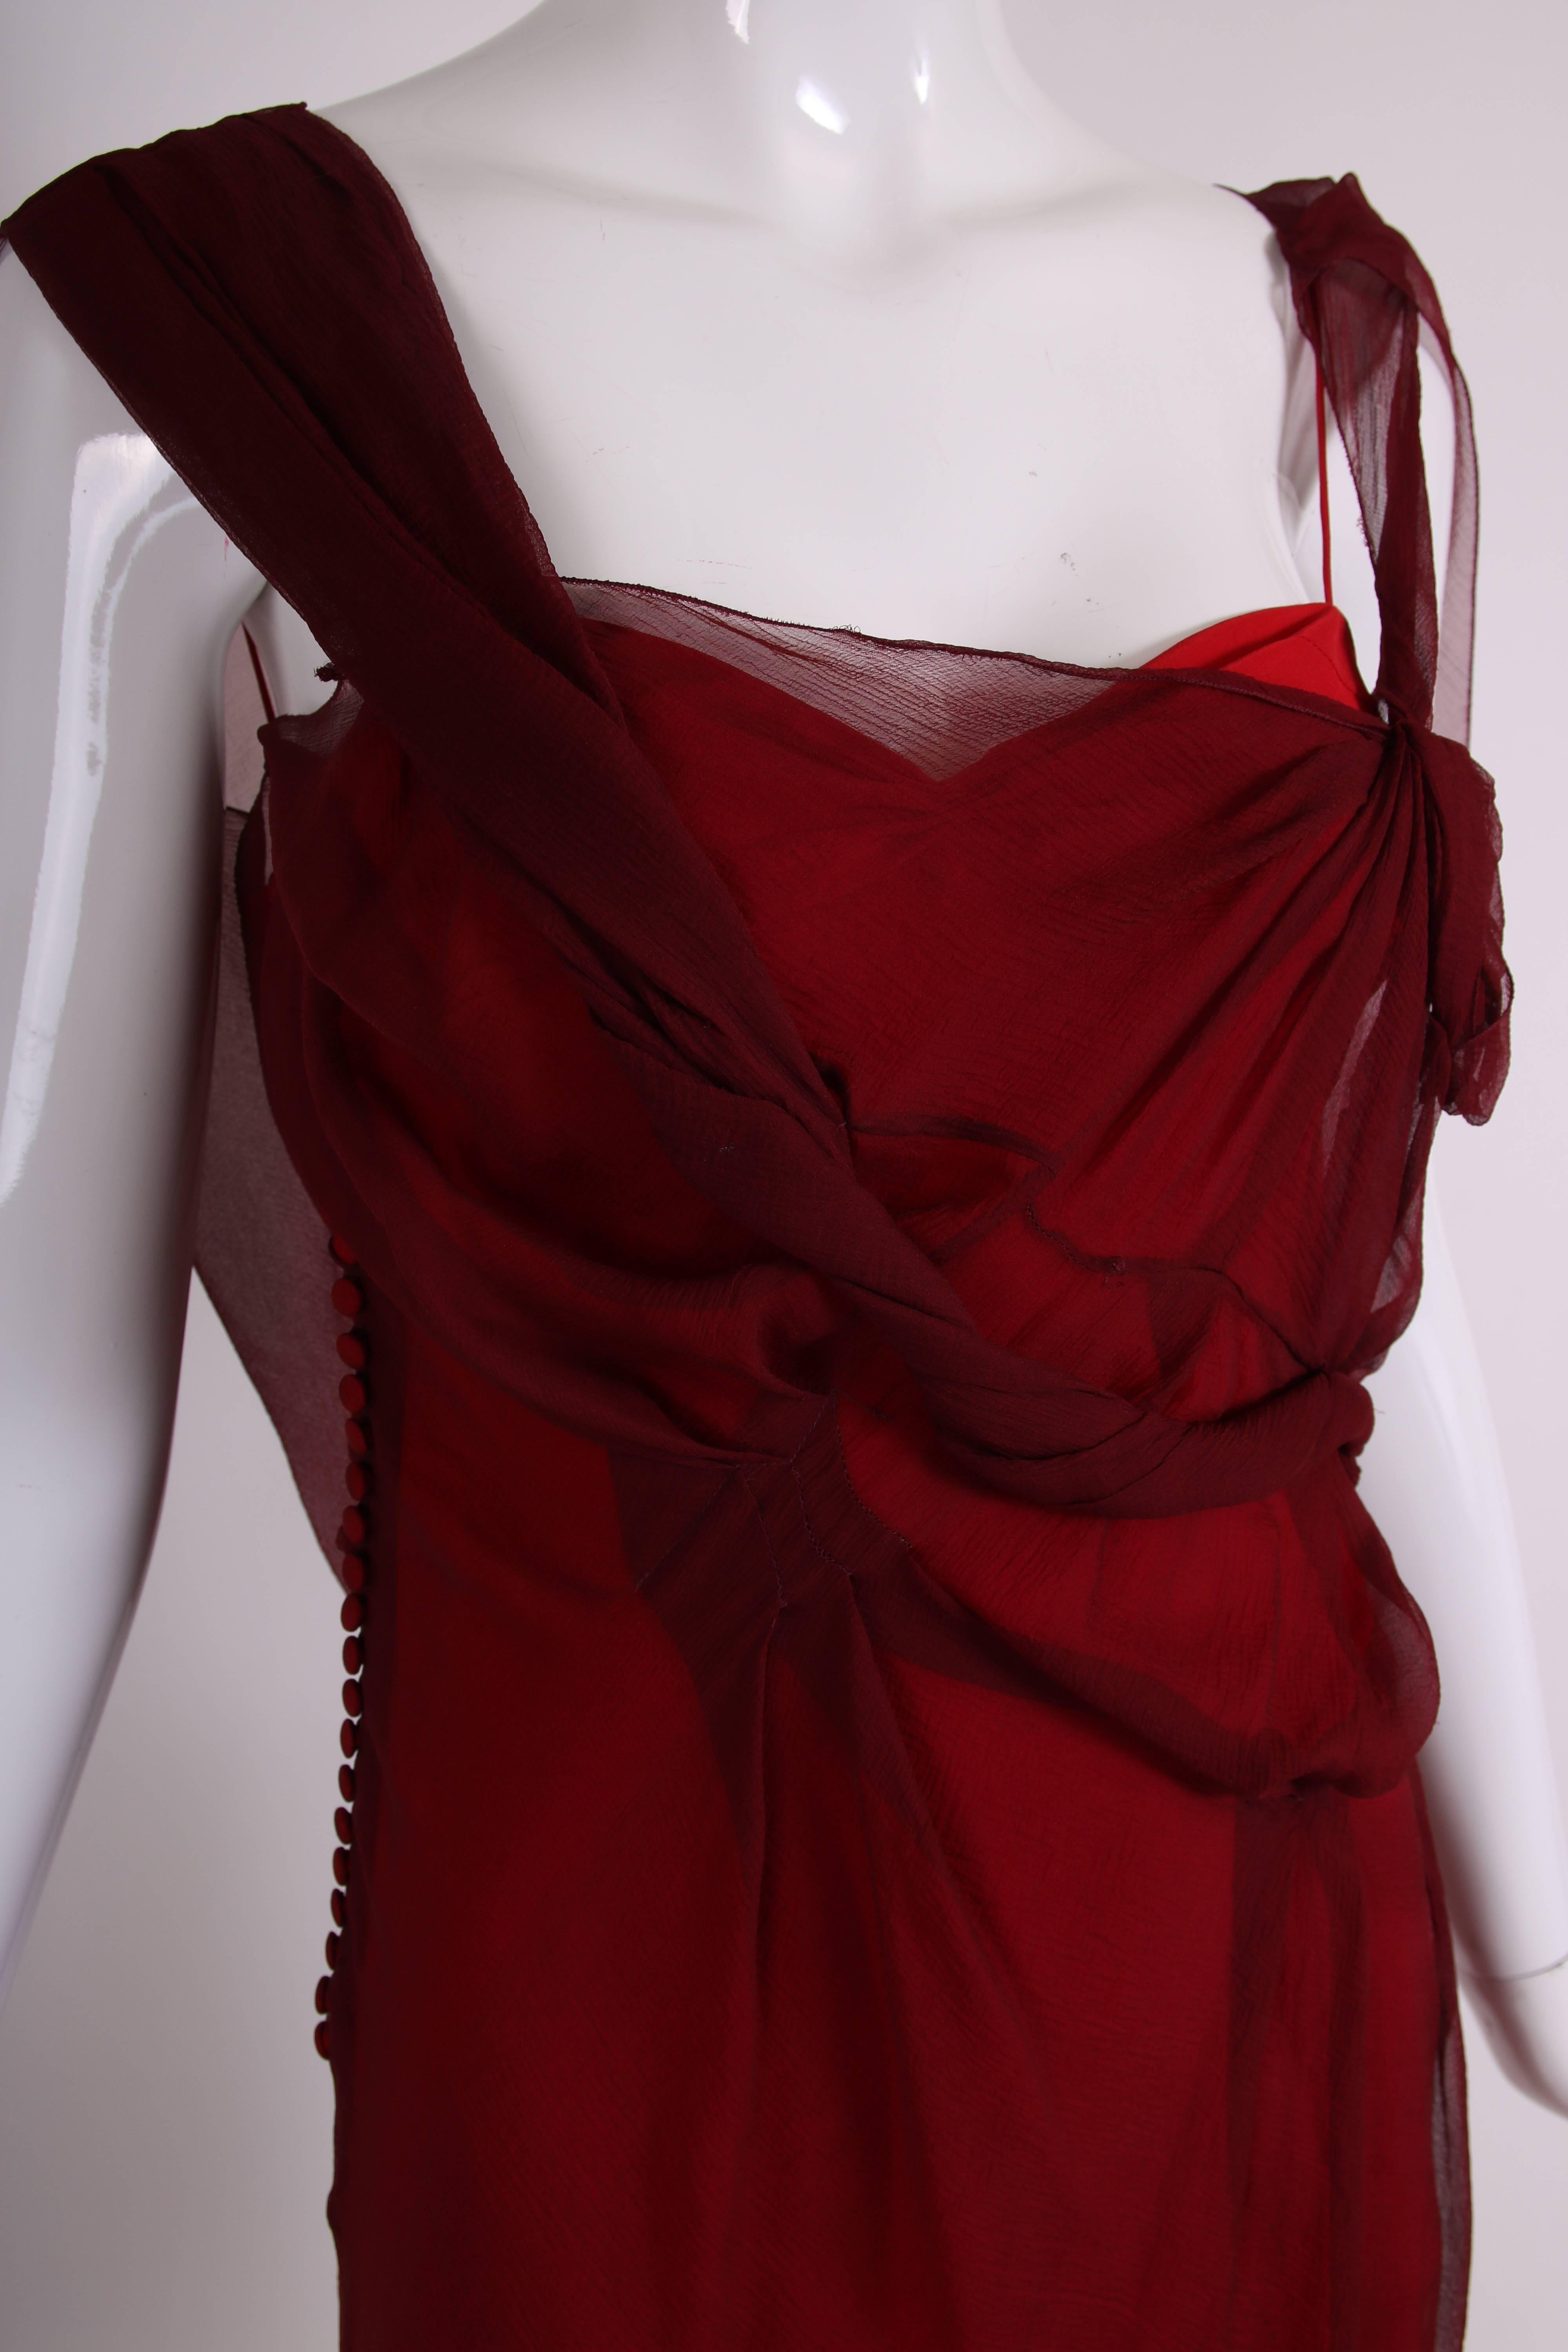 Red Christian Dior by John Galliano Burgundy Chiffon Asymmetrical Cocktail Dress For Sale